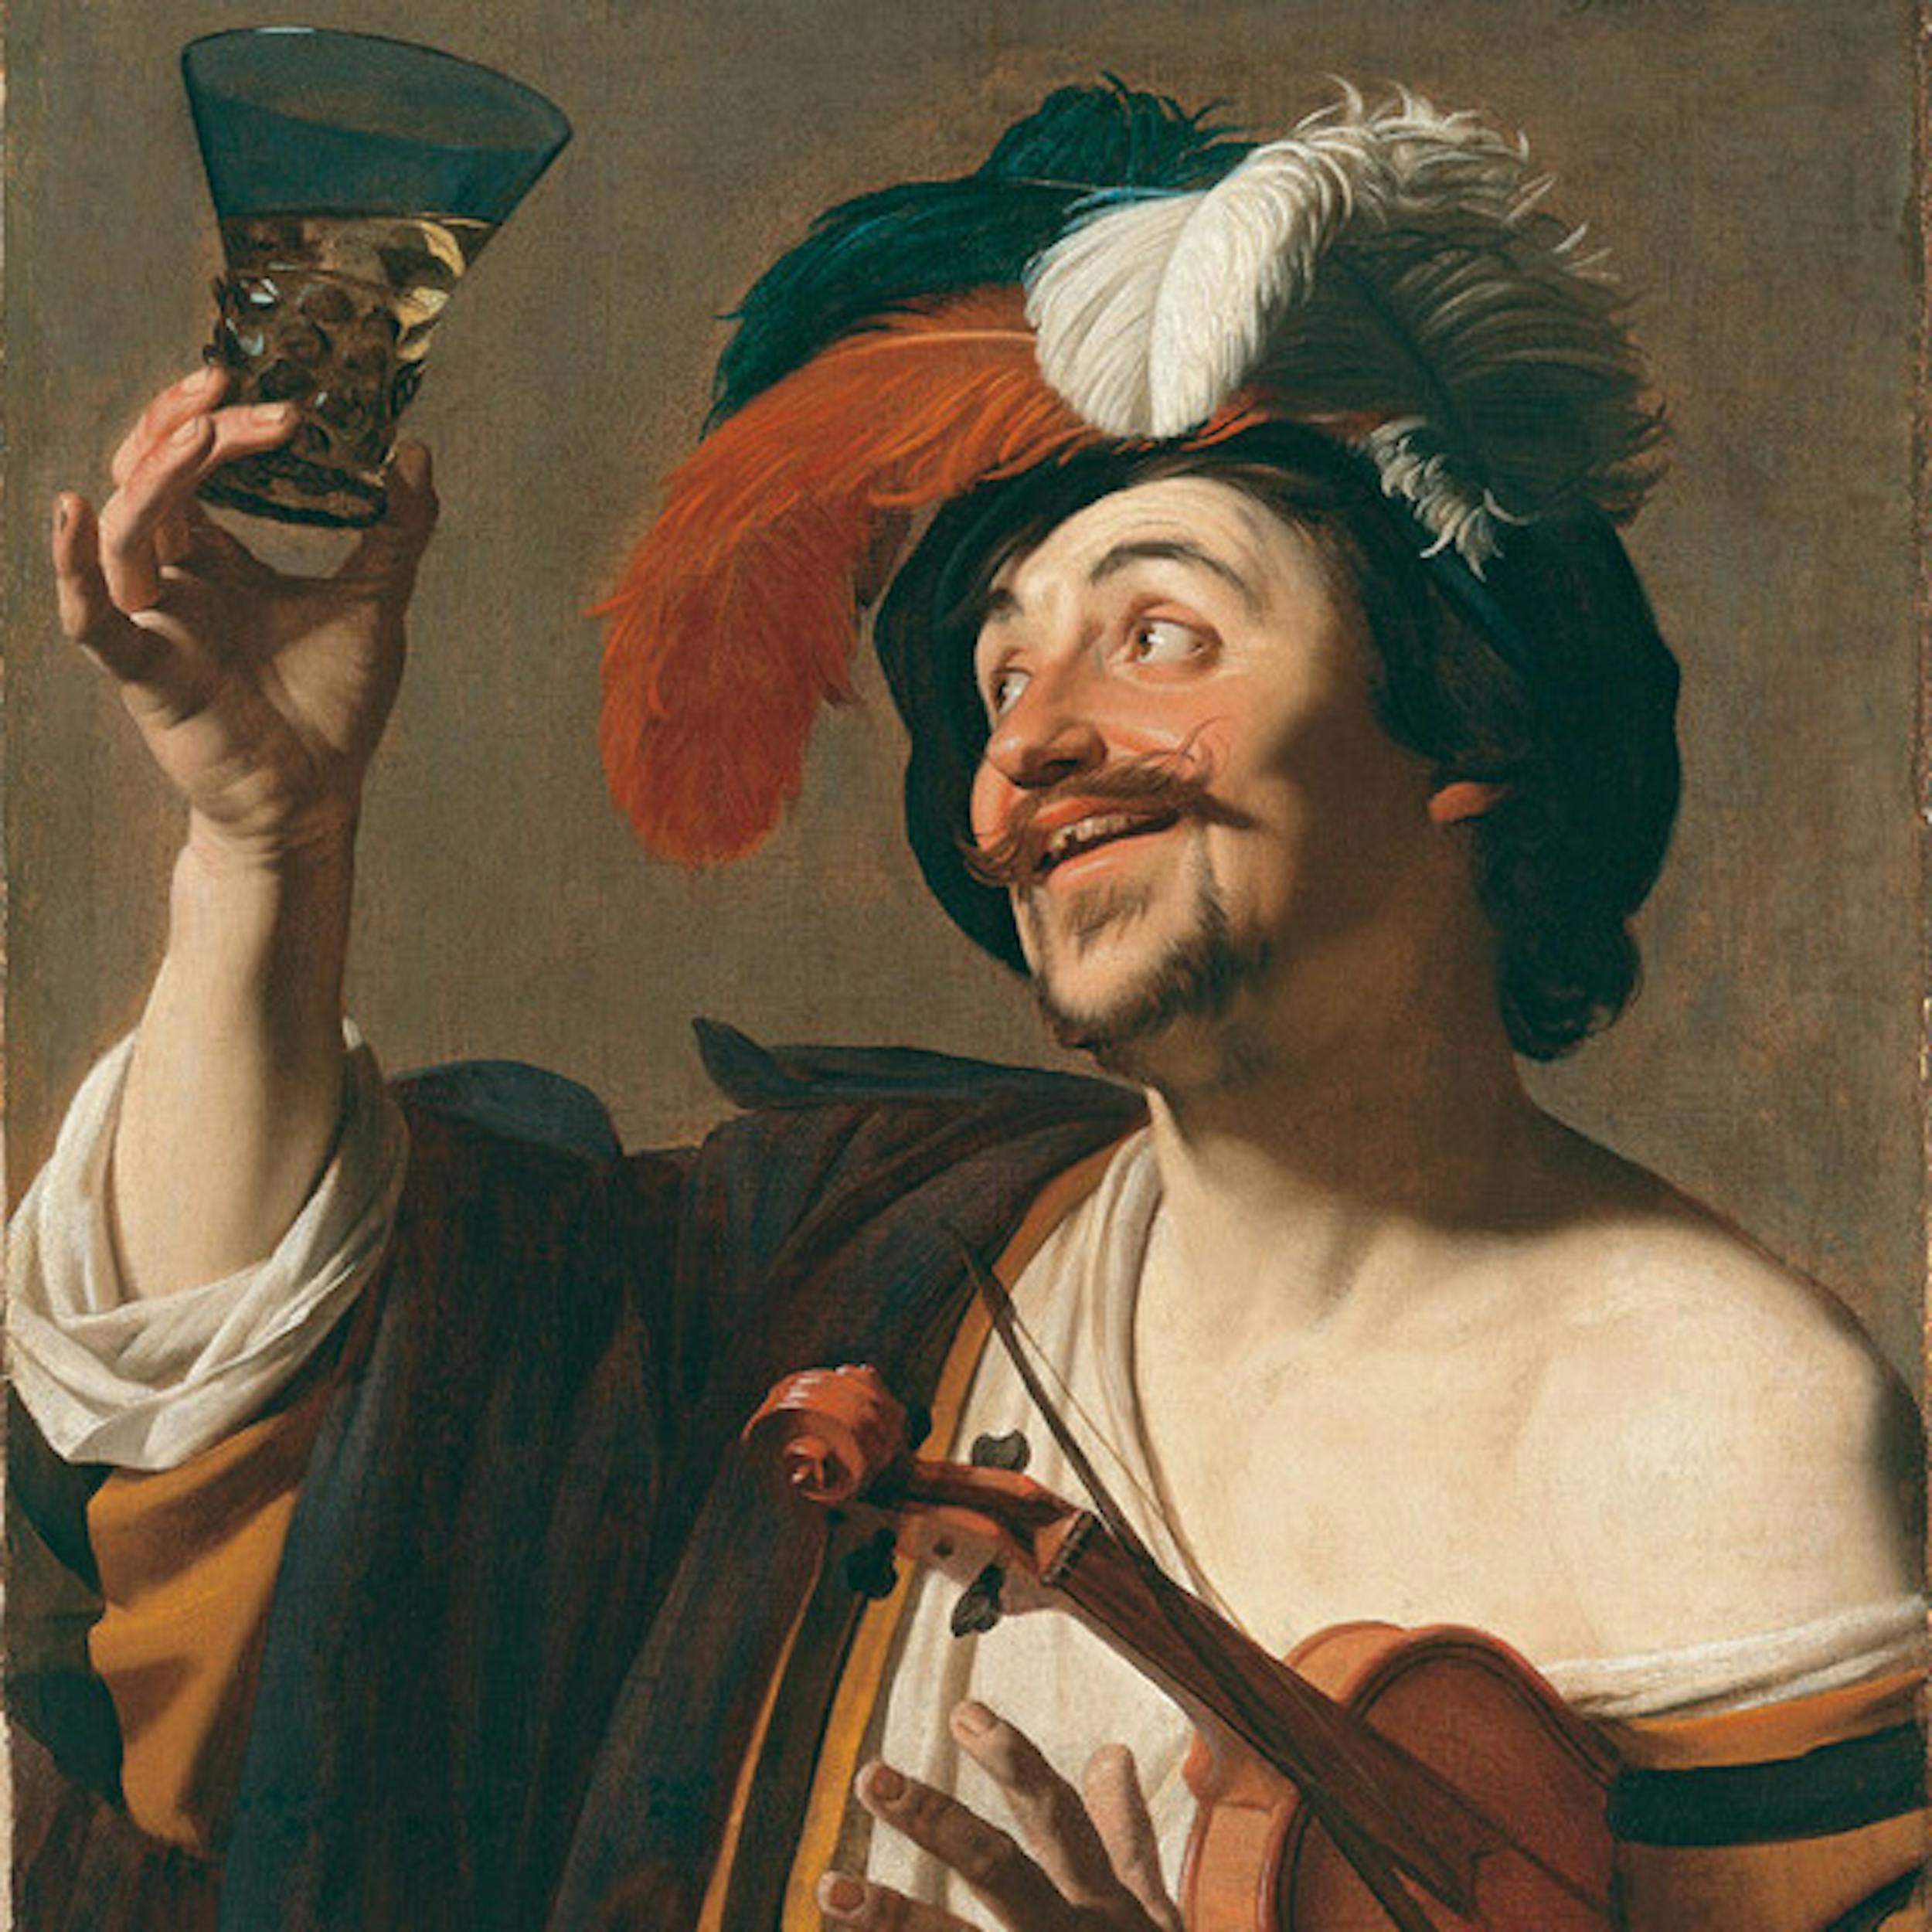 Gerrit van Honthorst detto Gherardo delle Notti (Utrecht 1592 - 1656), Allegro violinista con bicchiere di vino, dettaglio, 1623-1624, olio su tela, Museo Thyssen-Bornemisza, Madrid.